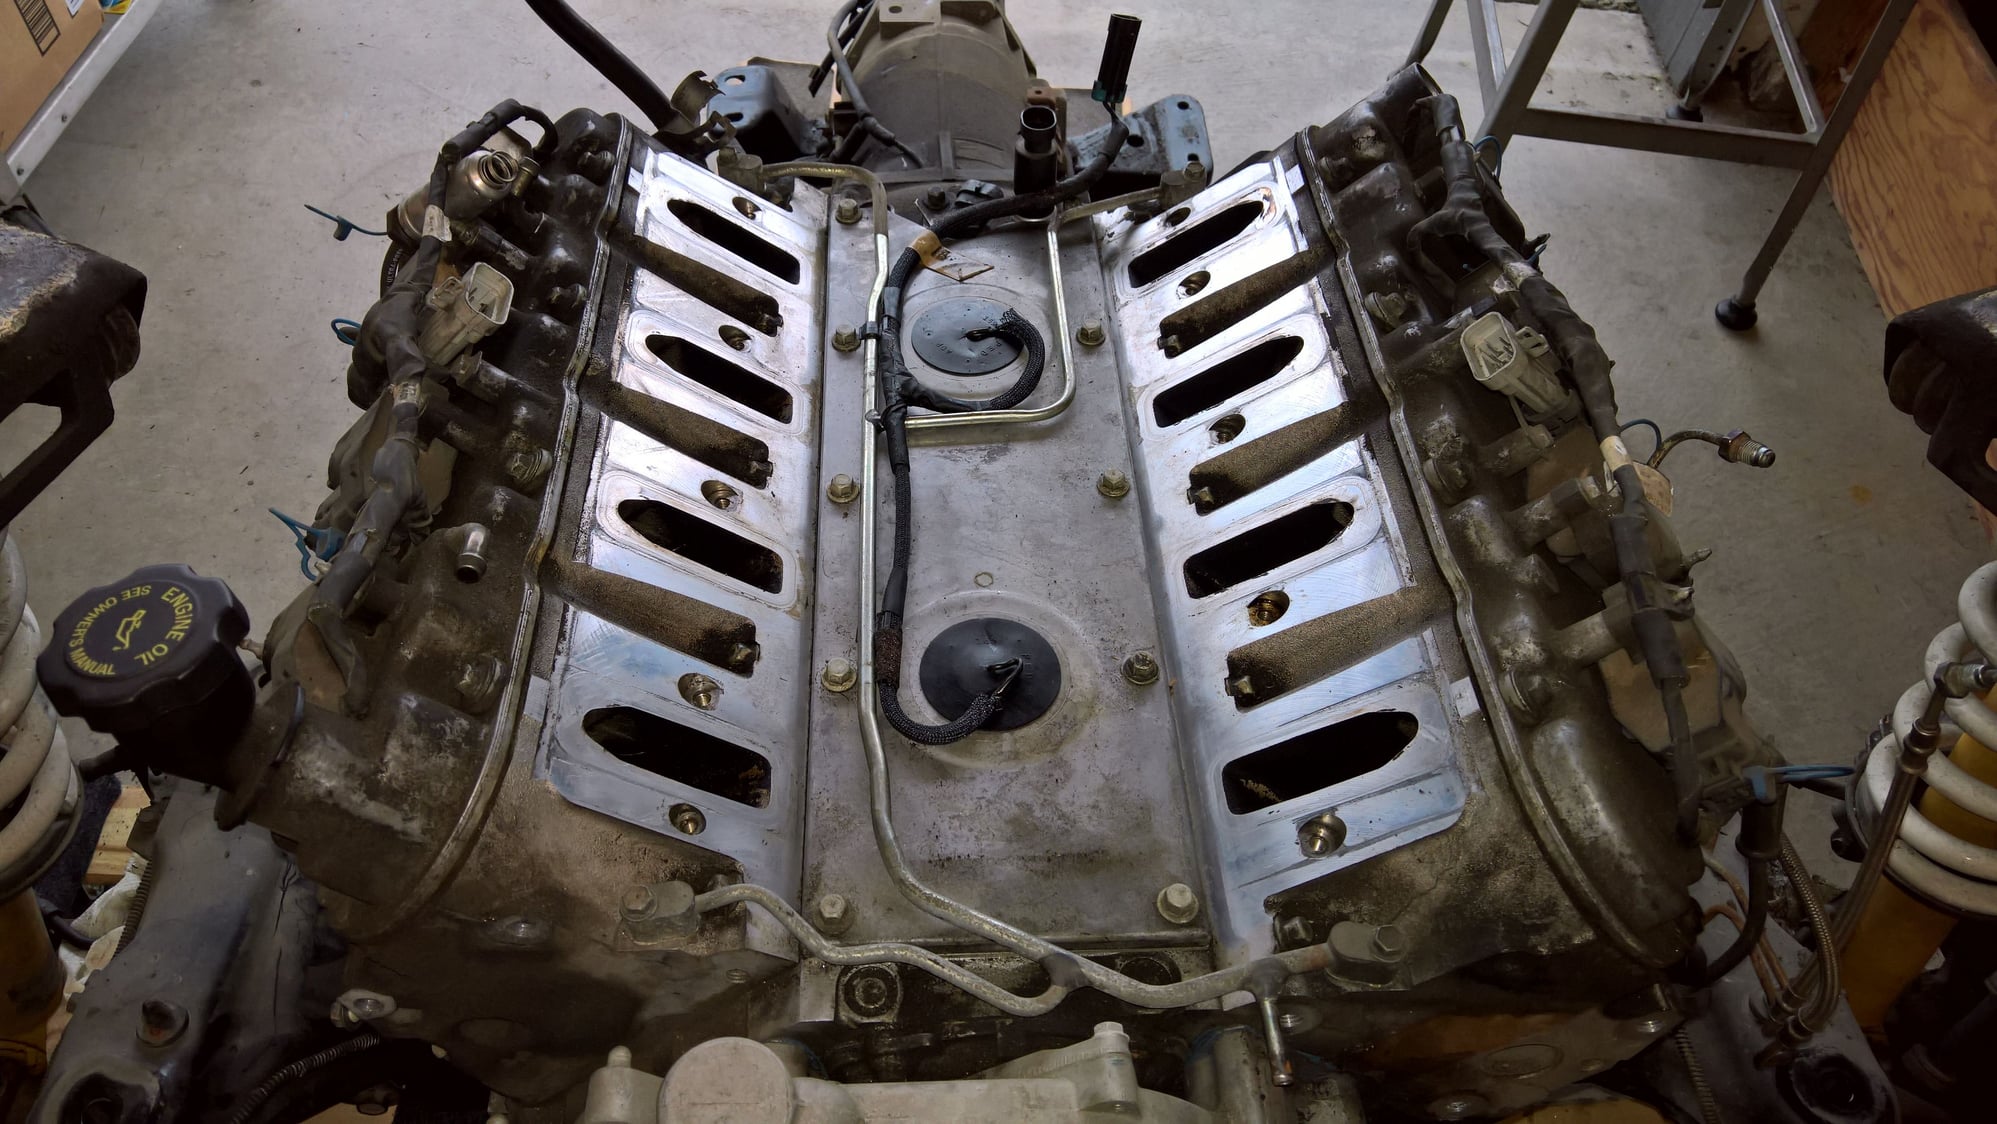  - LS1 Engine (w/ VIDEO) - South Pasadena, CA 91030, United States